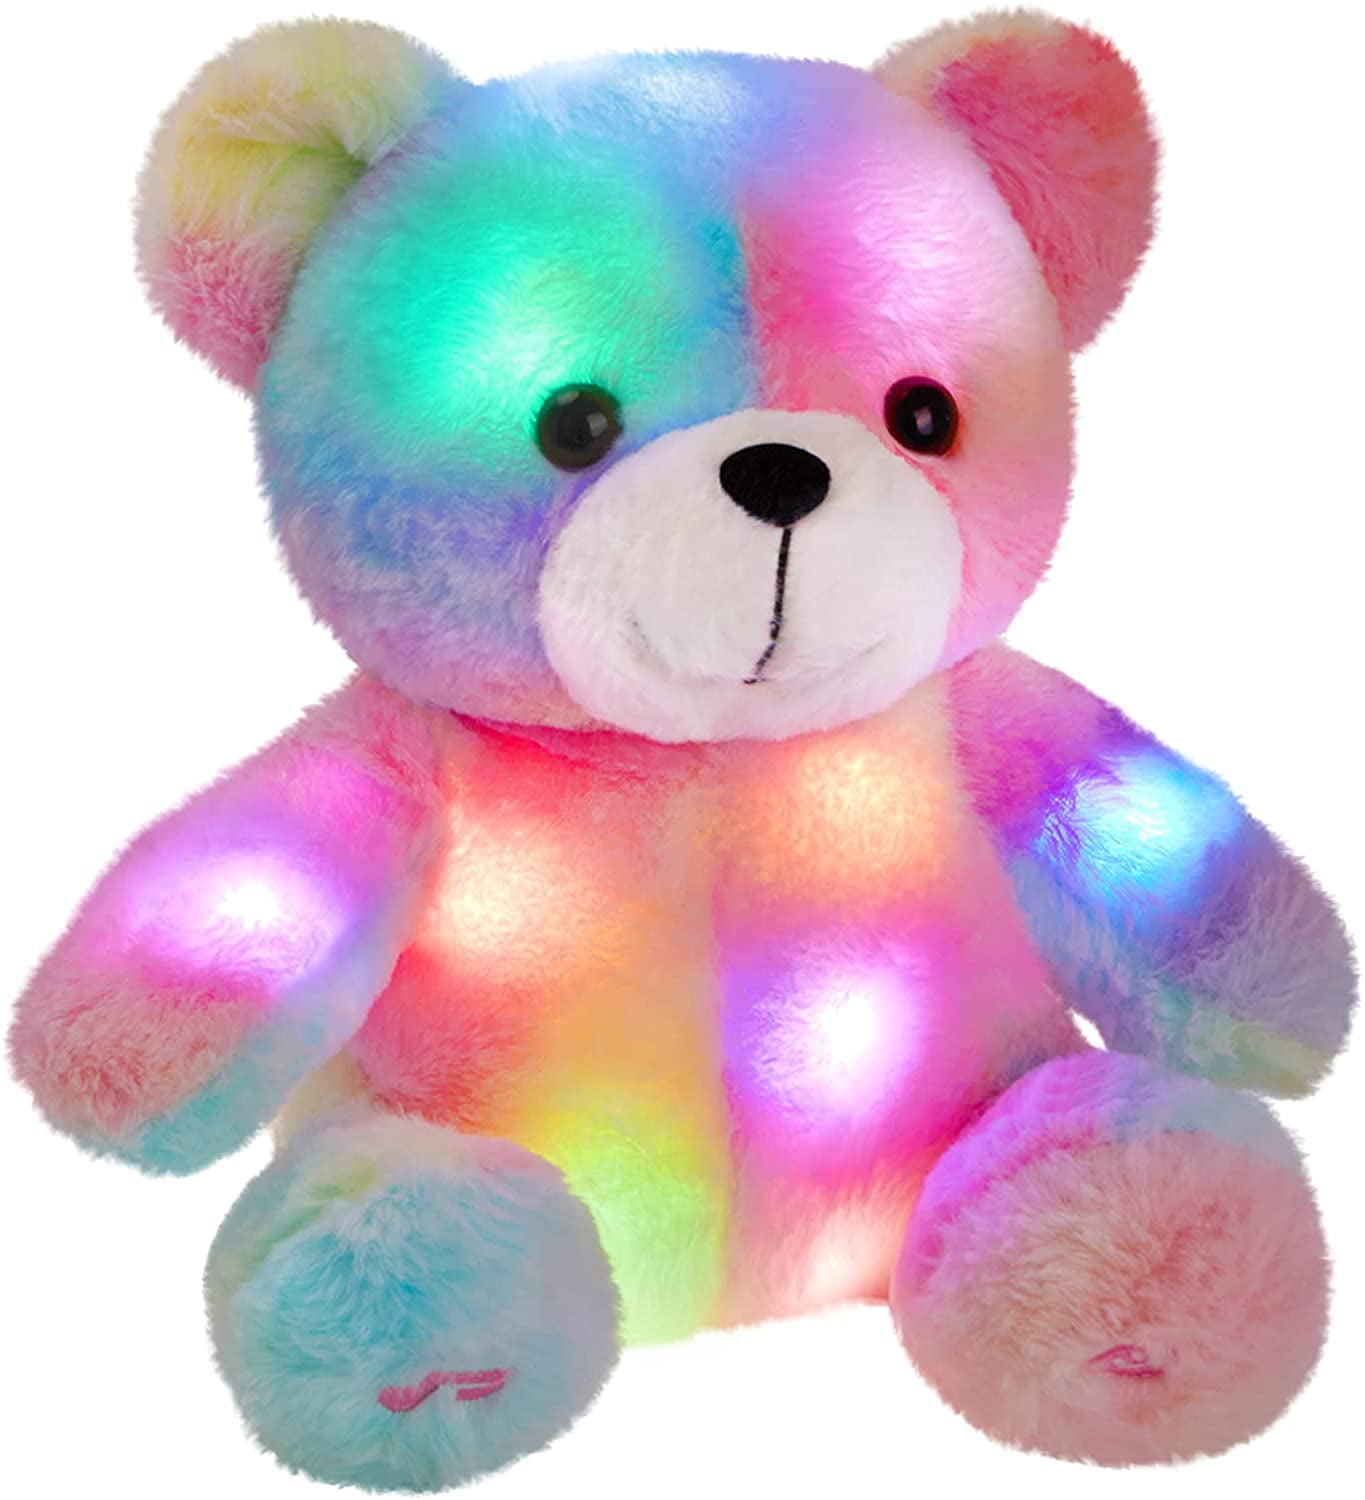 Gift Present Birthday Xmas Small Cute Soft Cuddly NEW Pink Teddy Bears 